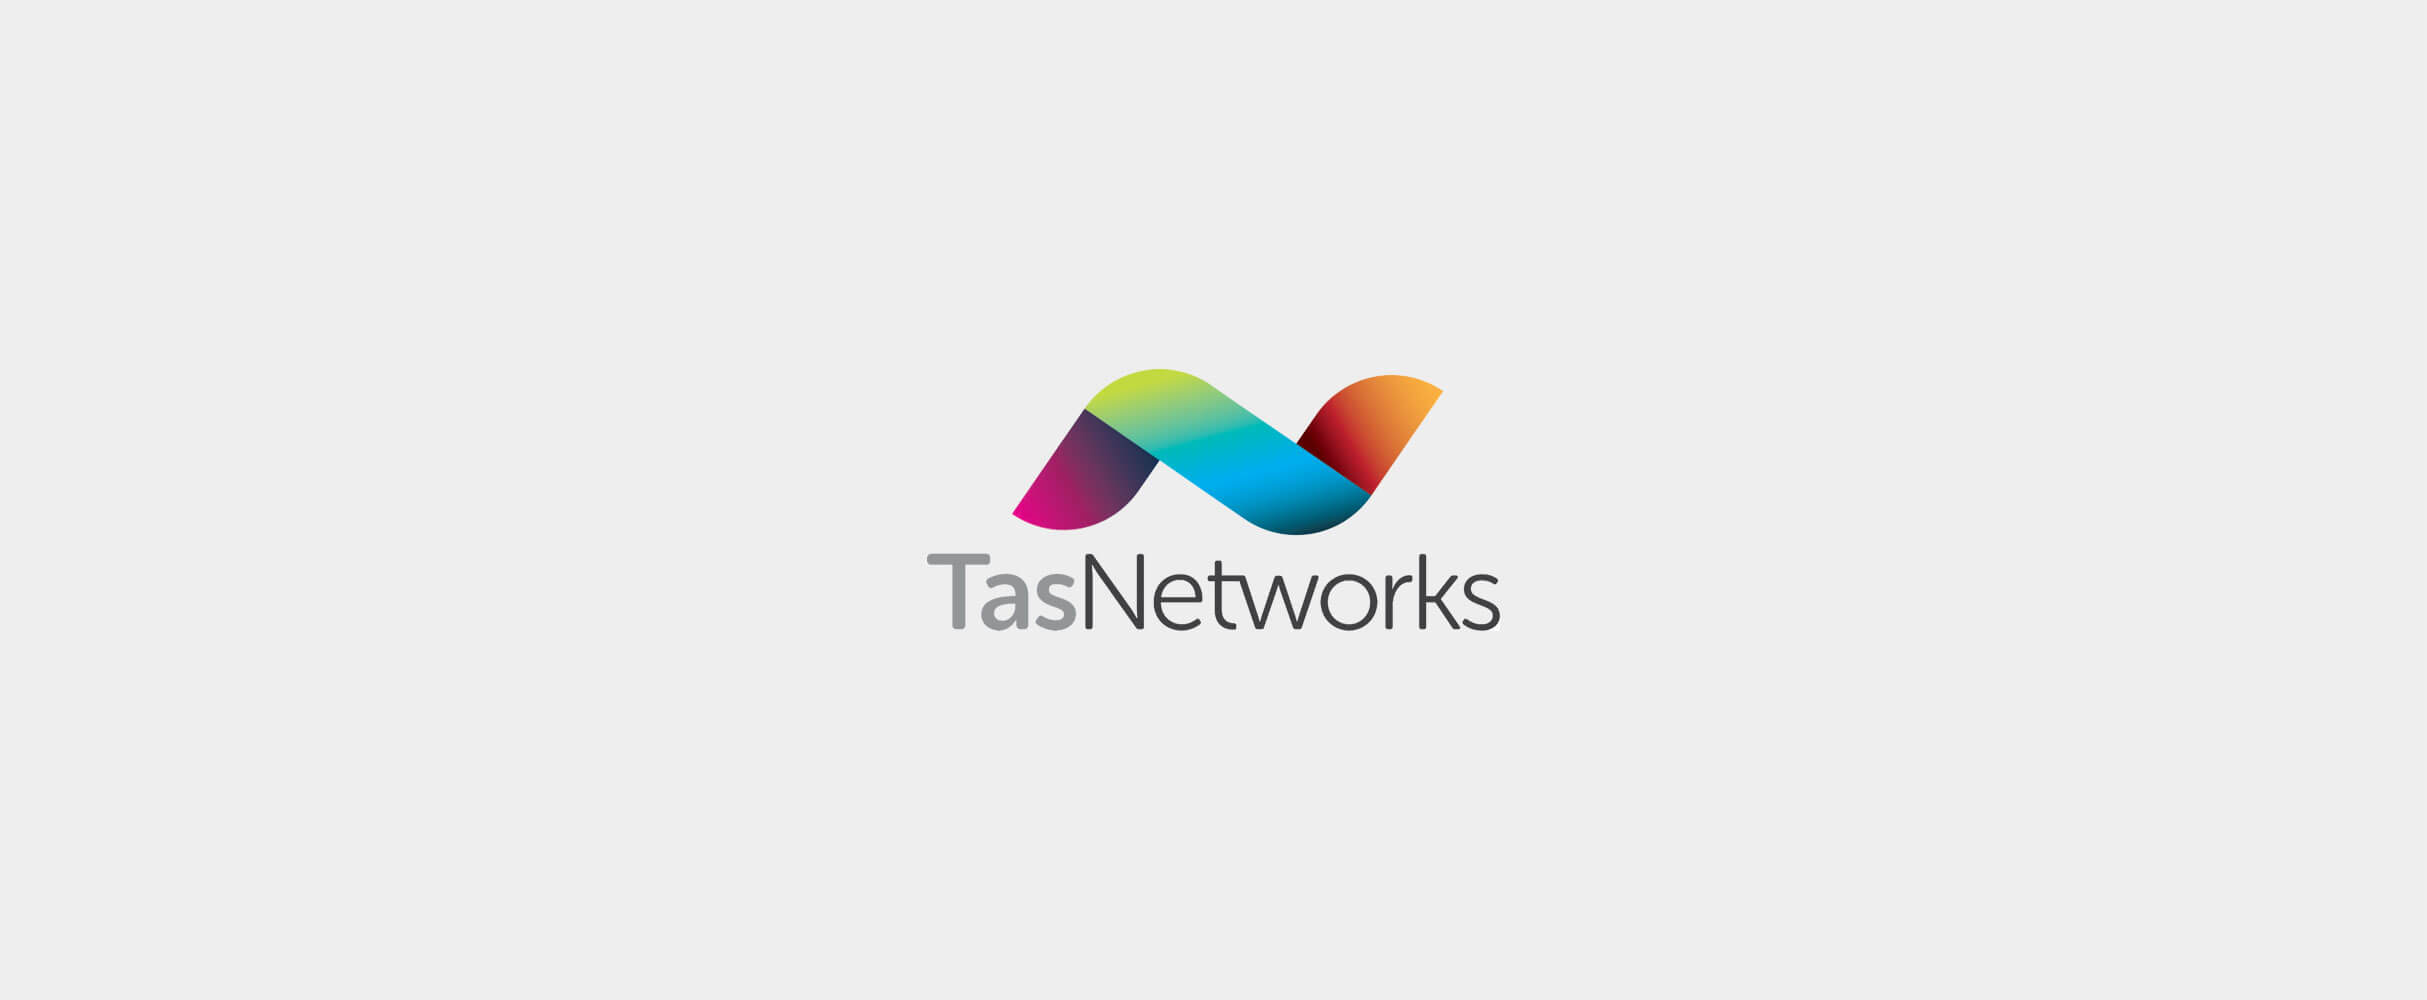 TasNetworks Logo